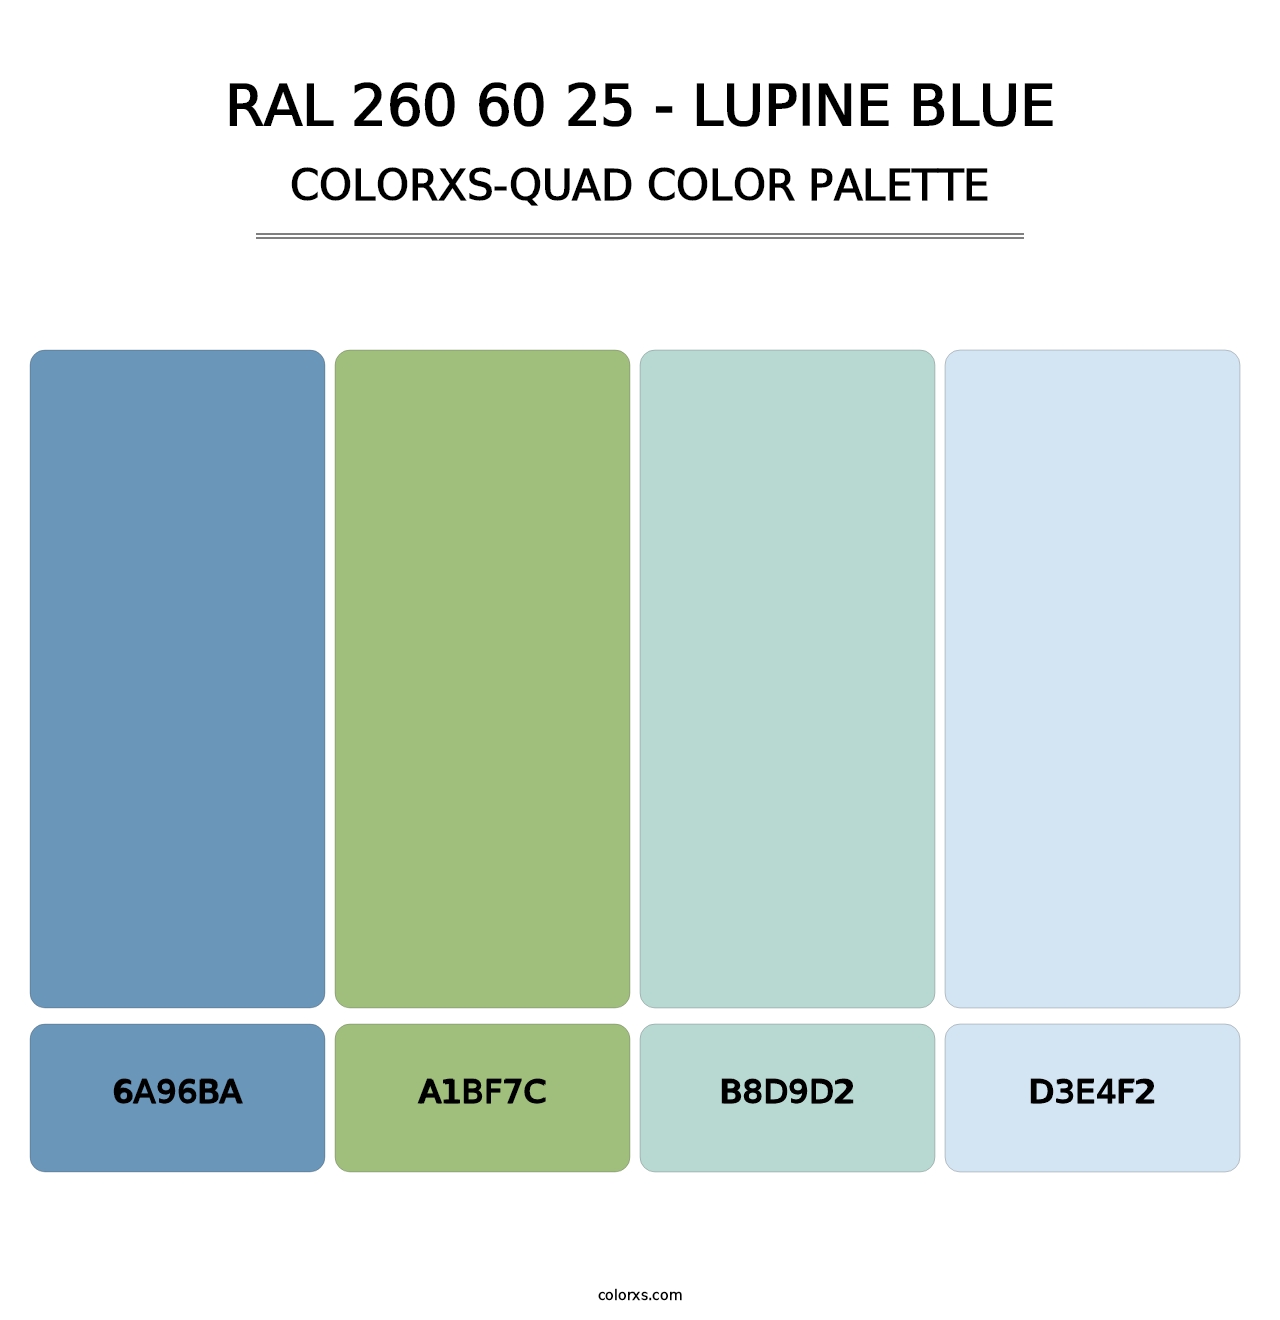 RAL 260 60 25 - Lupine Blue - Colorxs Quad Palette